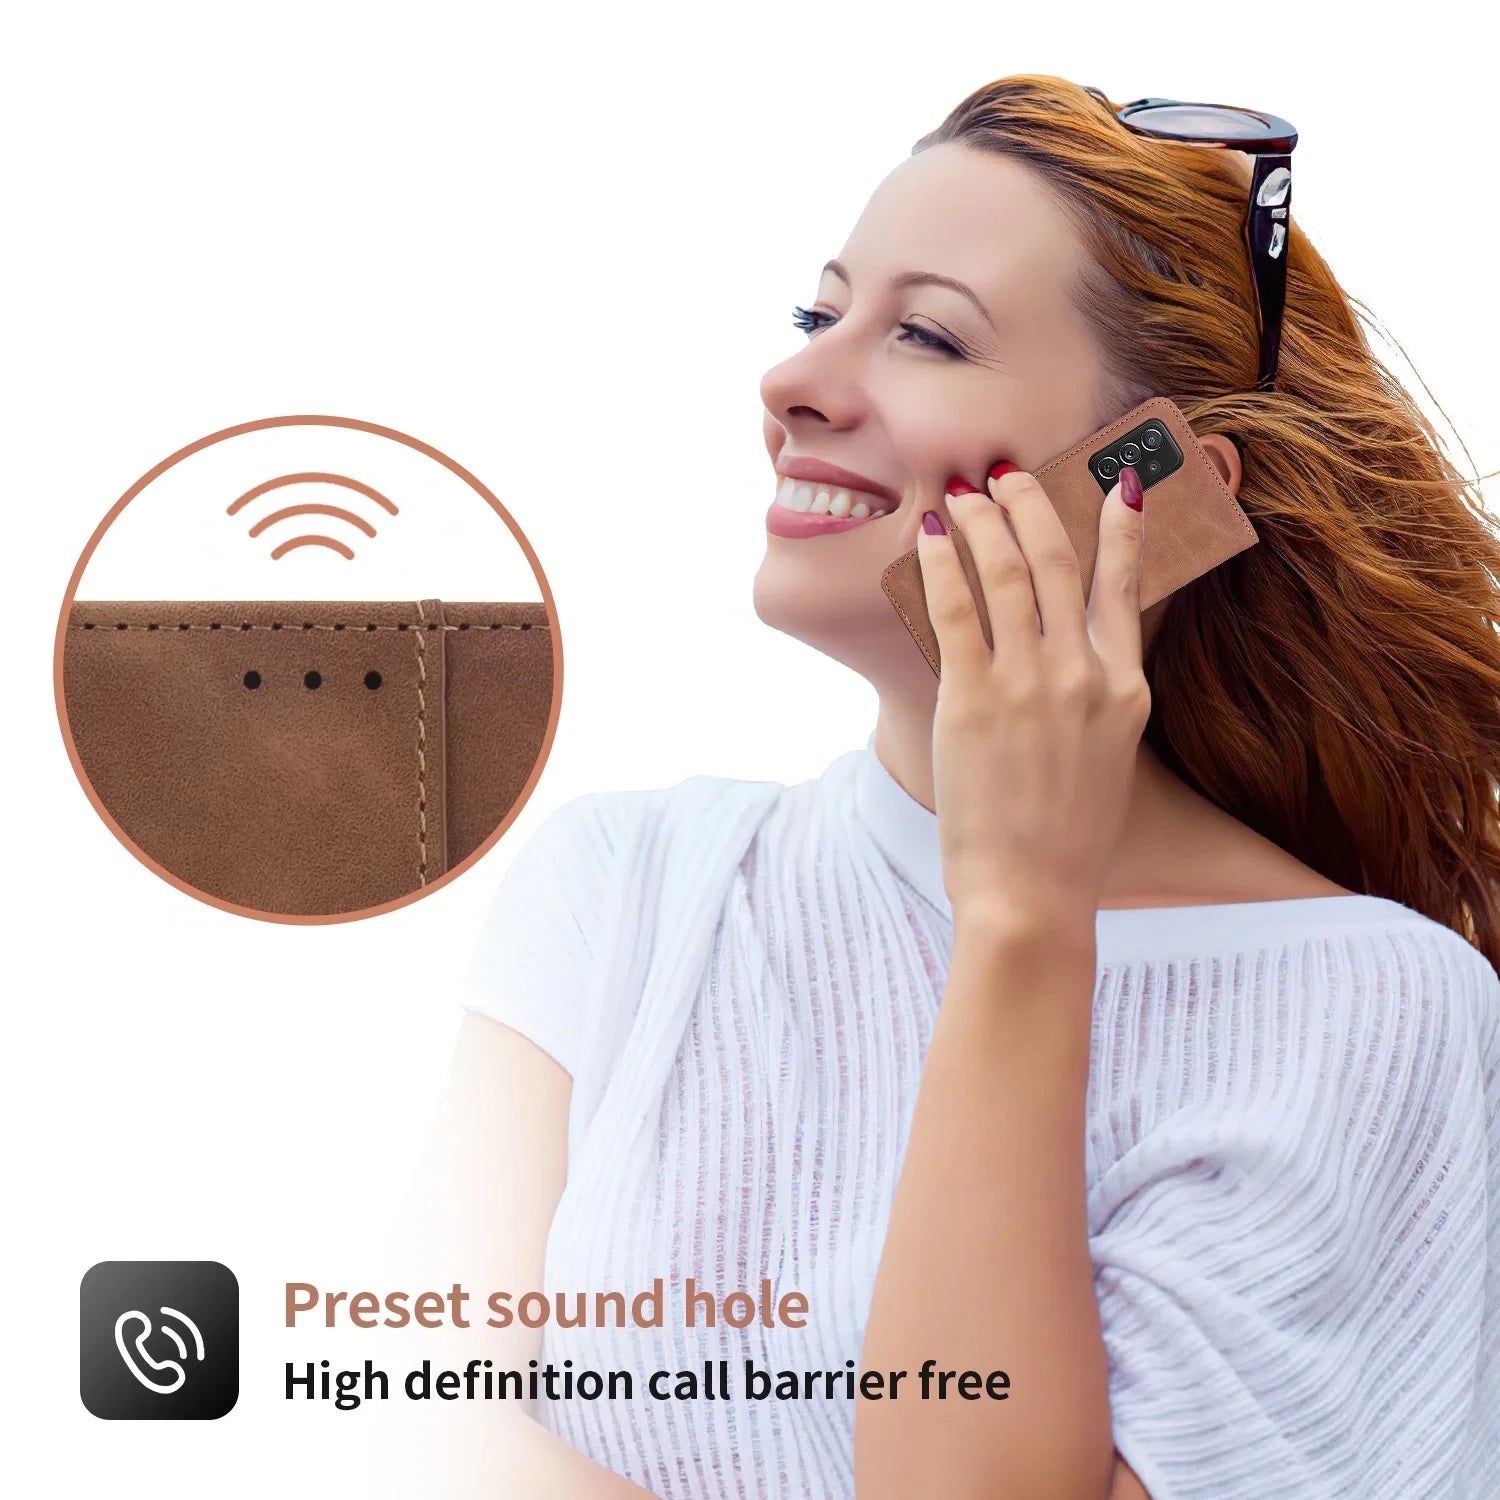 Magnetic Flip Card Holder Wallet Leather Galaxy A33 Case - DealJustDeal